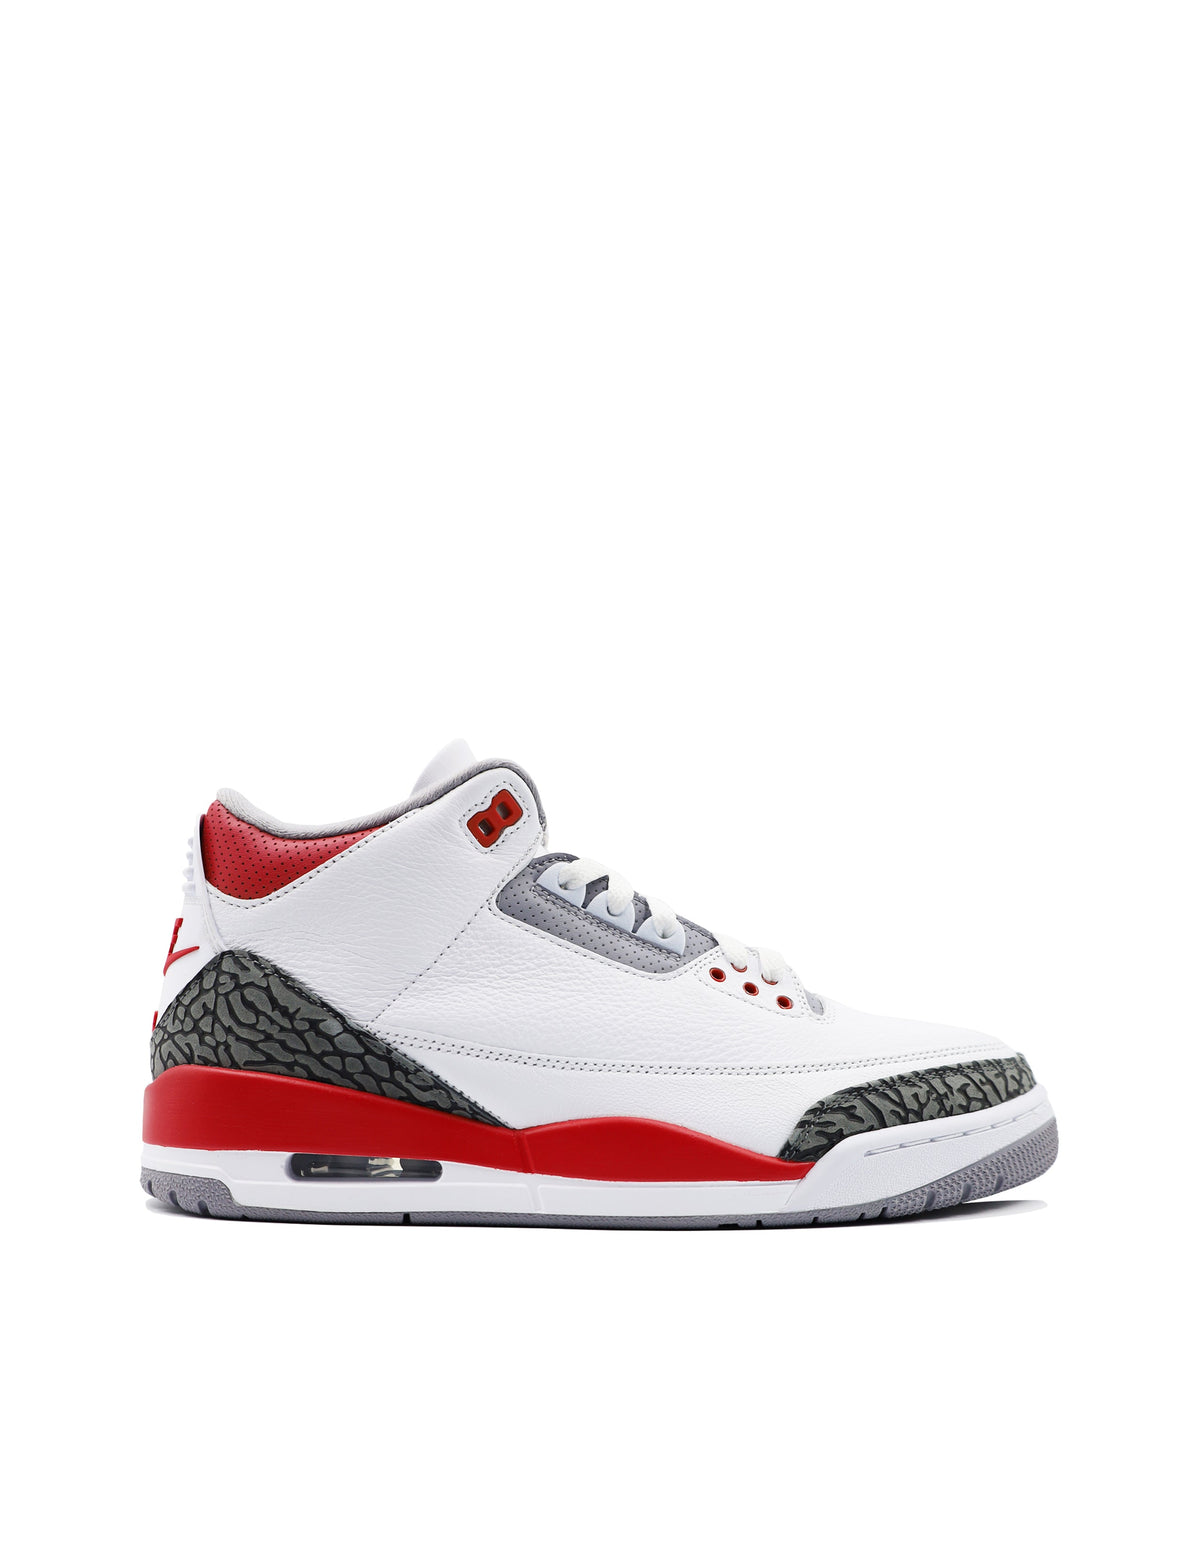 Jordan 3 Retro "Fire Red"